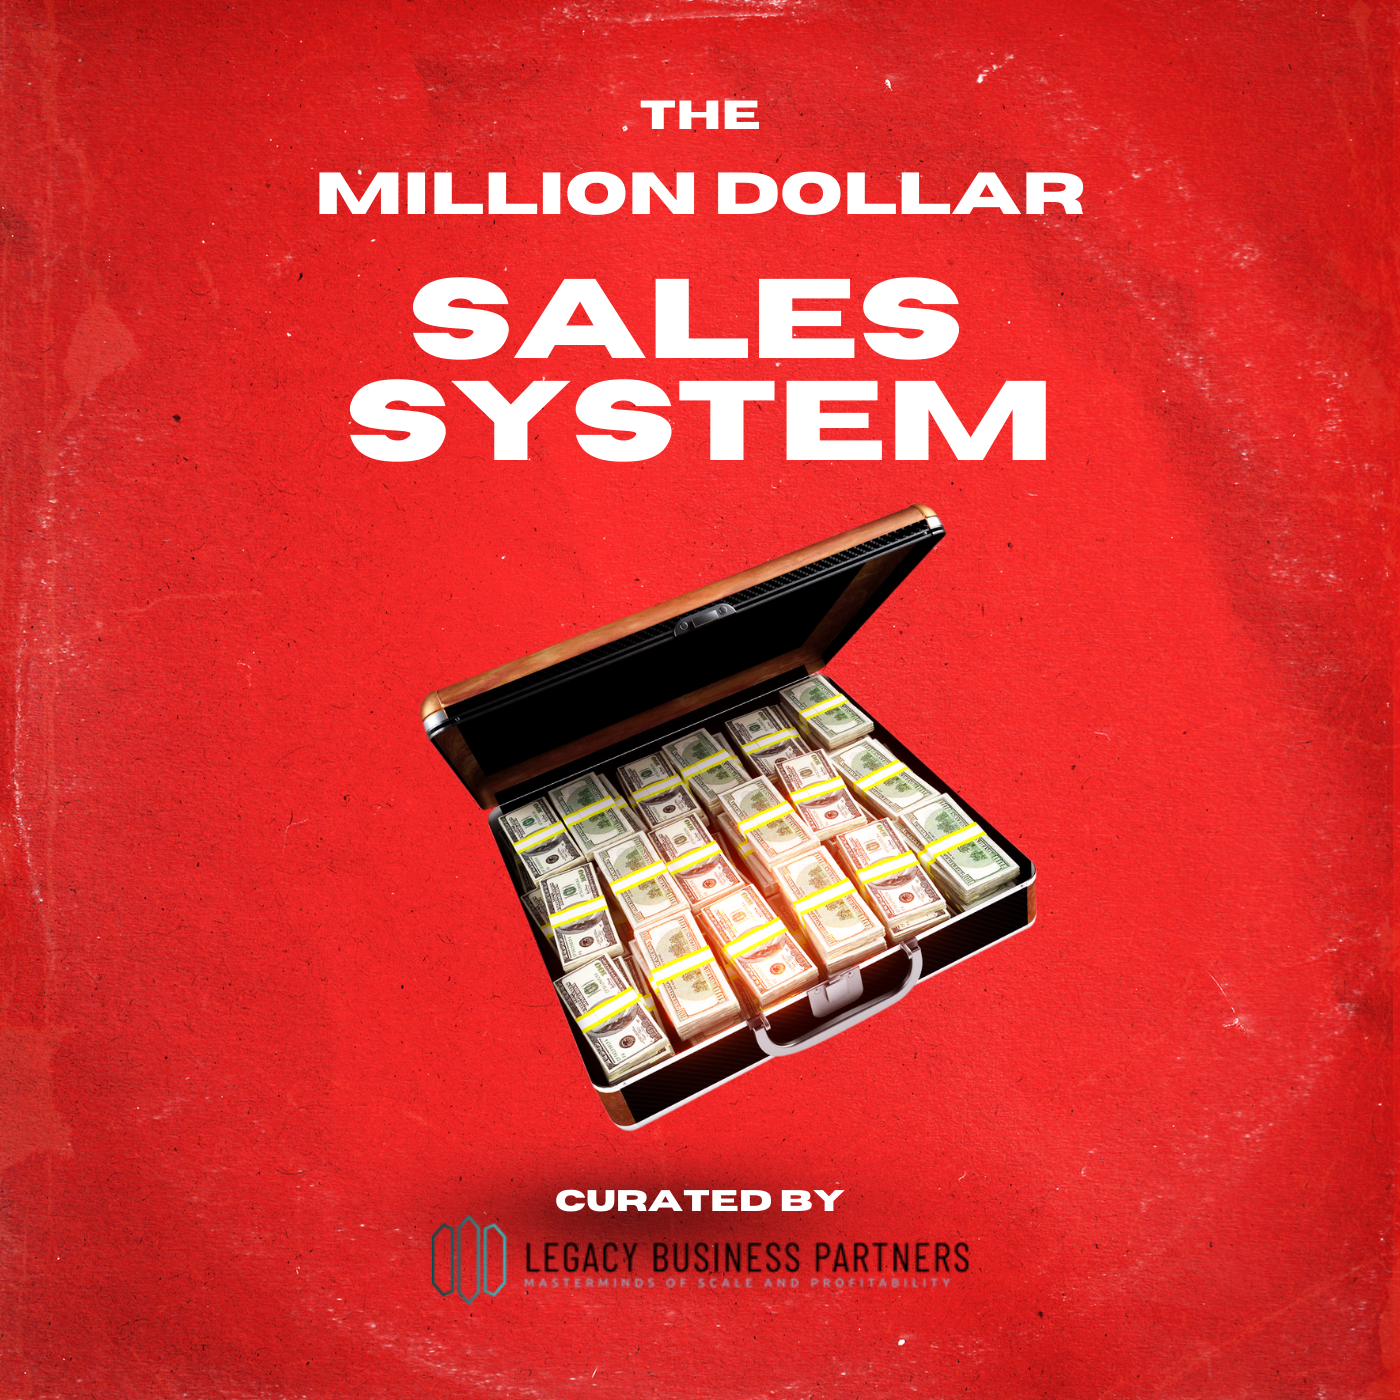 The Million Dollar Sales System